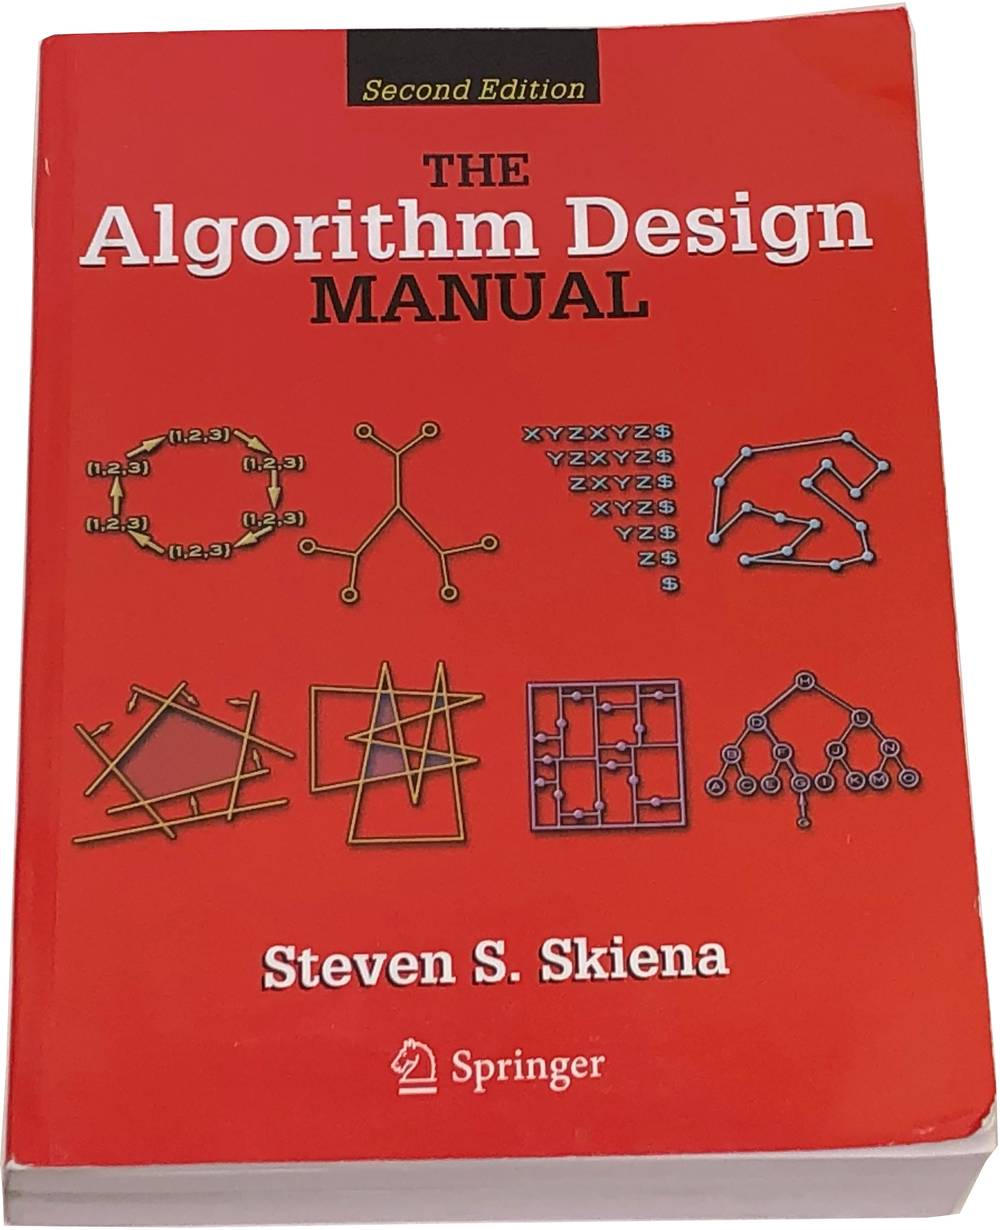 Book image of The Algorithm Design Manual.